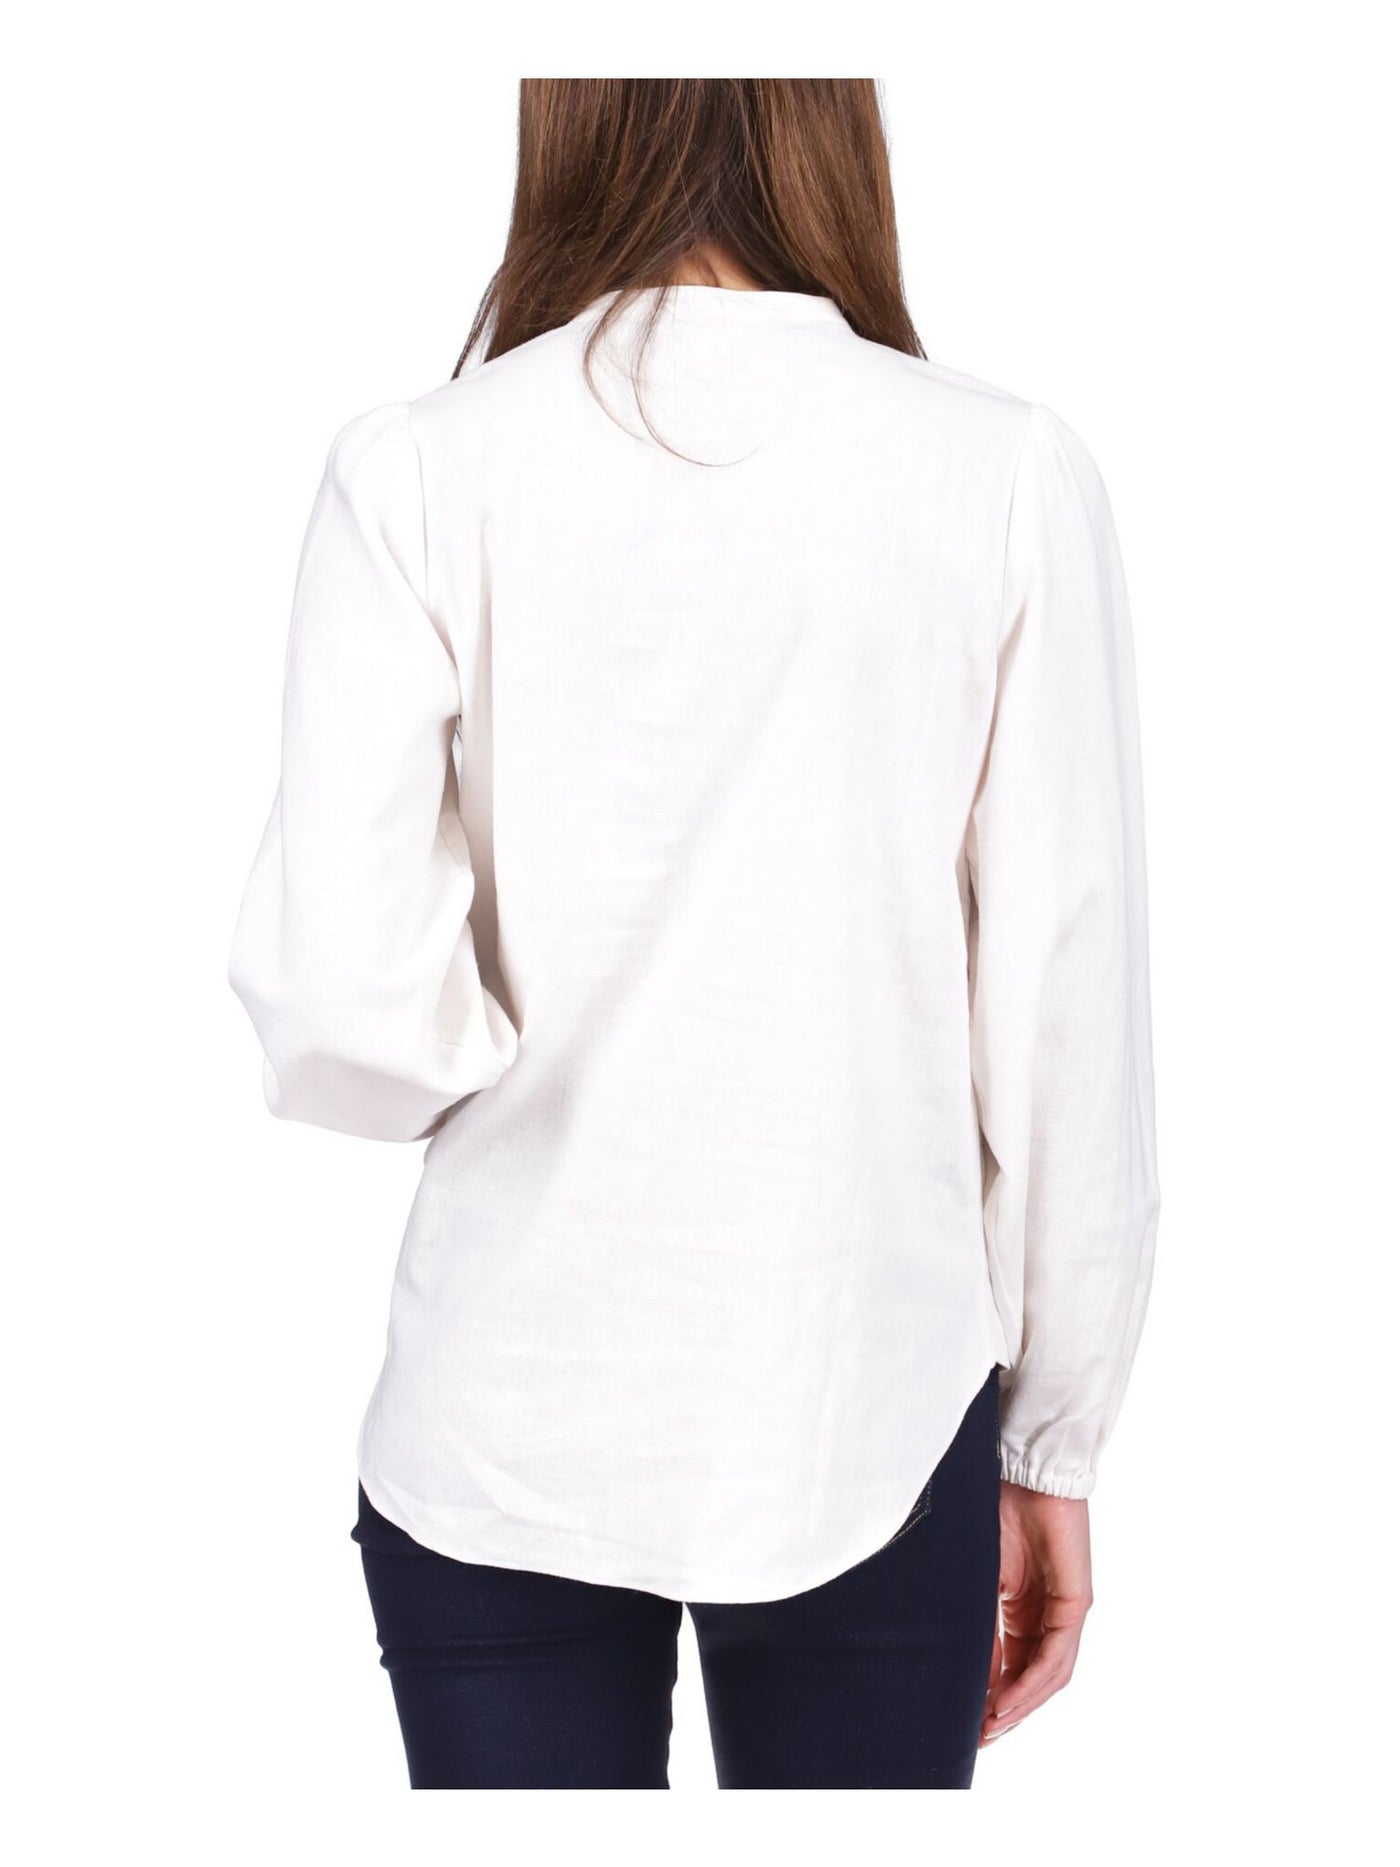 MICHAEL MICHAEL KORS Womens White Blouson Sleeve Mock Neck Wear To Work Button Up Top XL